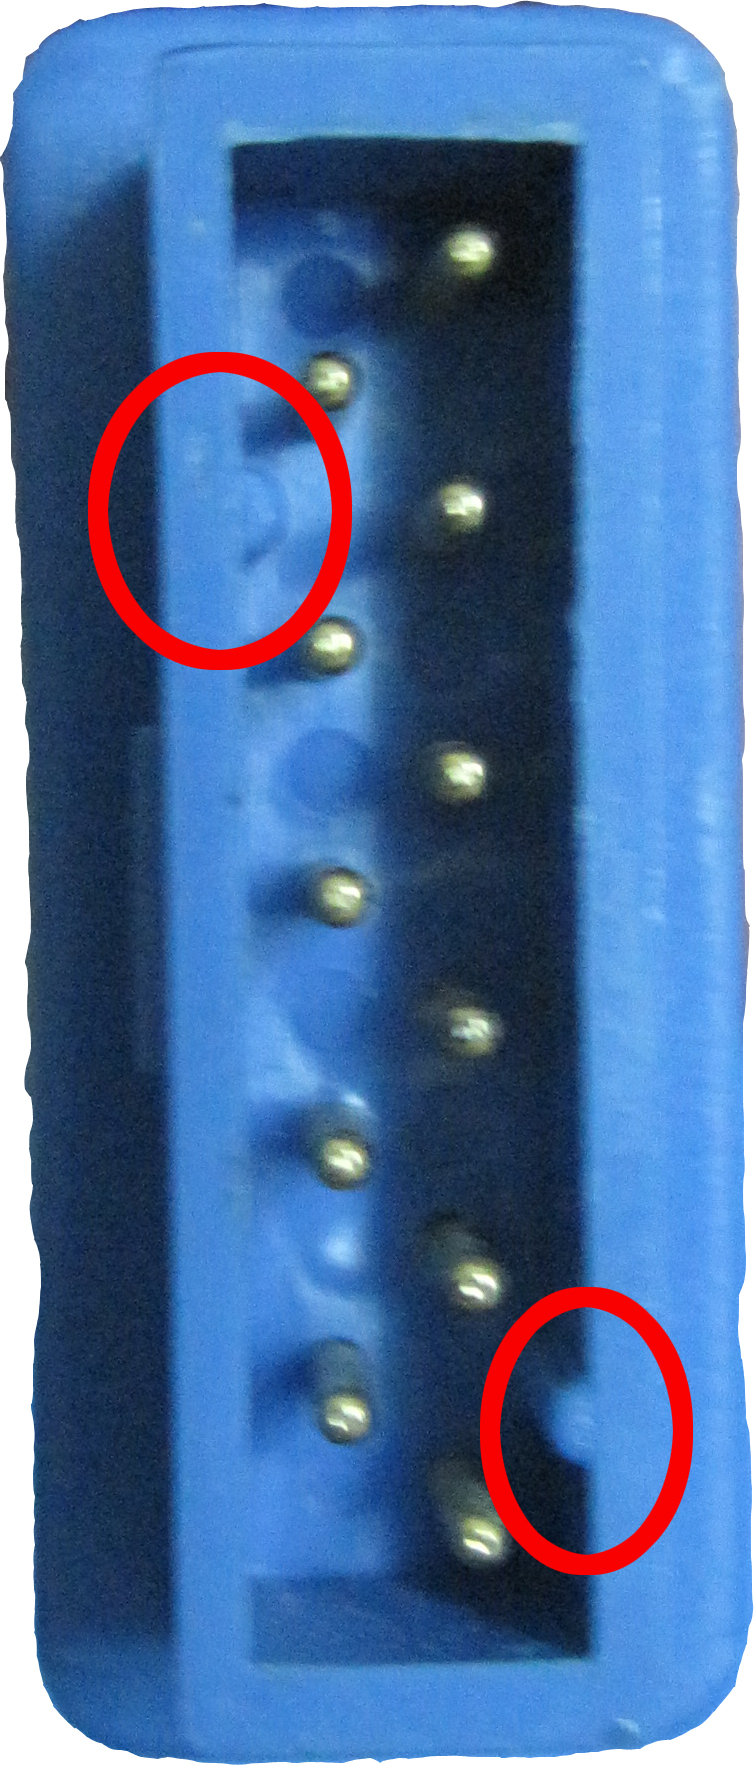 GE Masimo spo2 connector